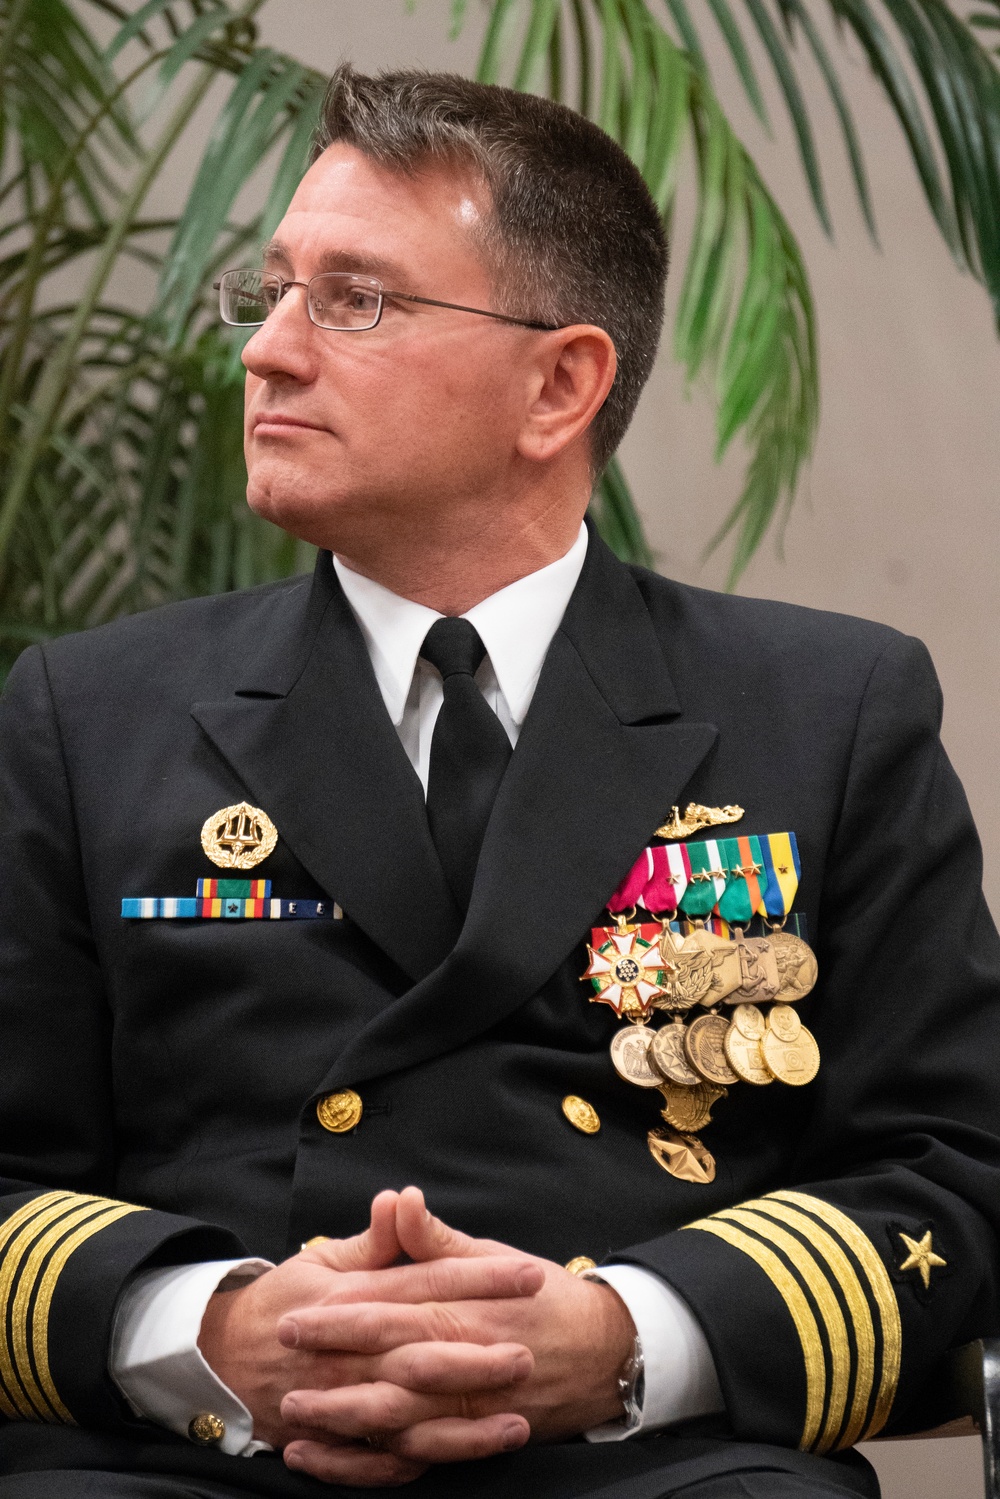 Undersea Surveillance Welcomes New Commanding Officer